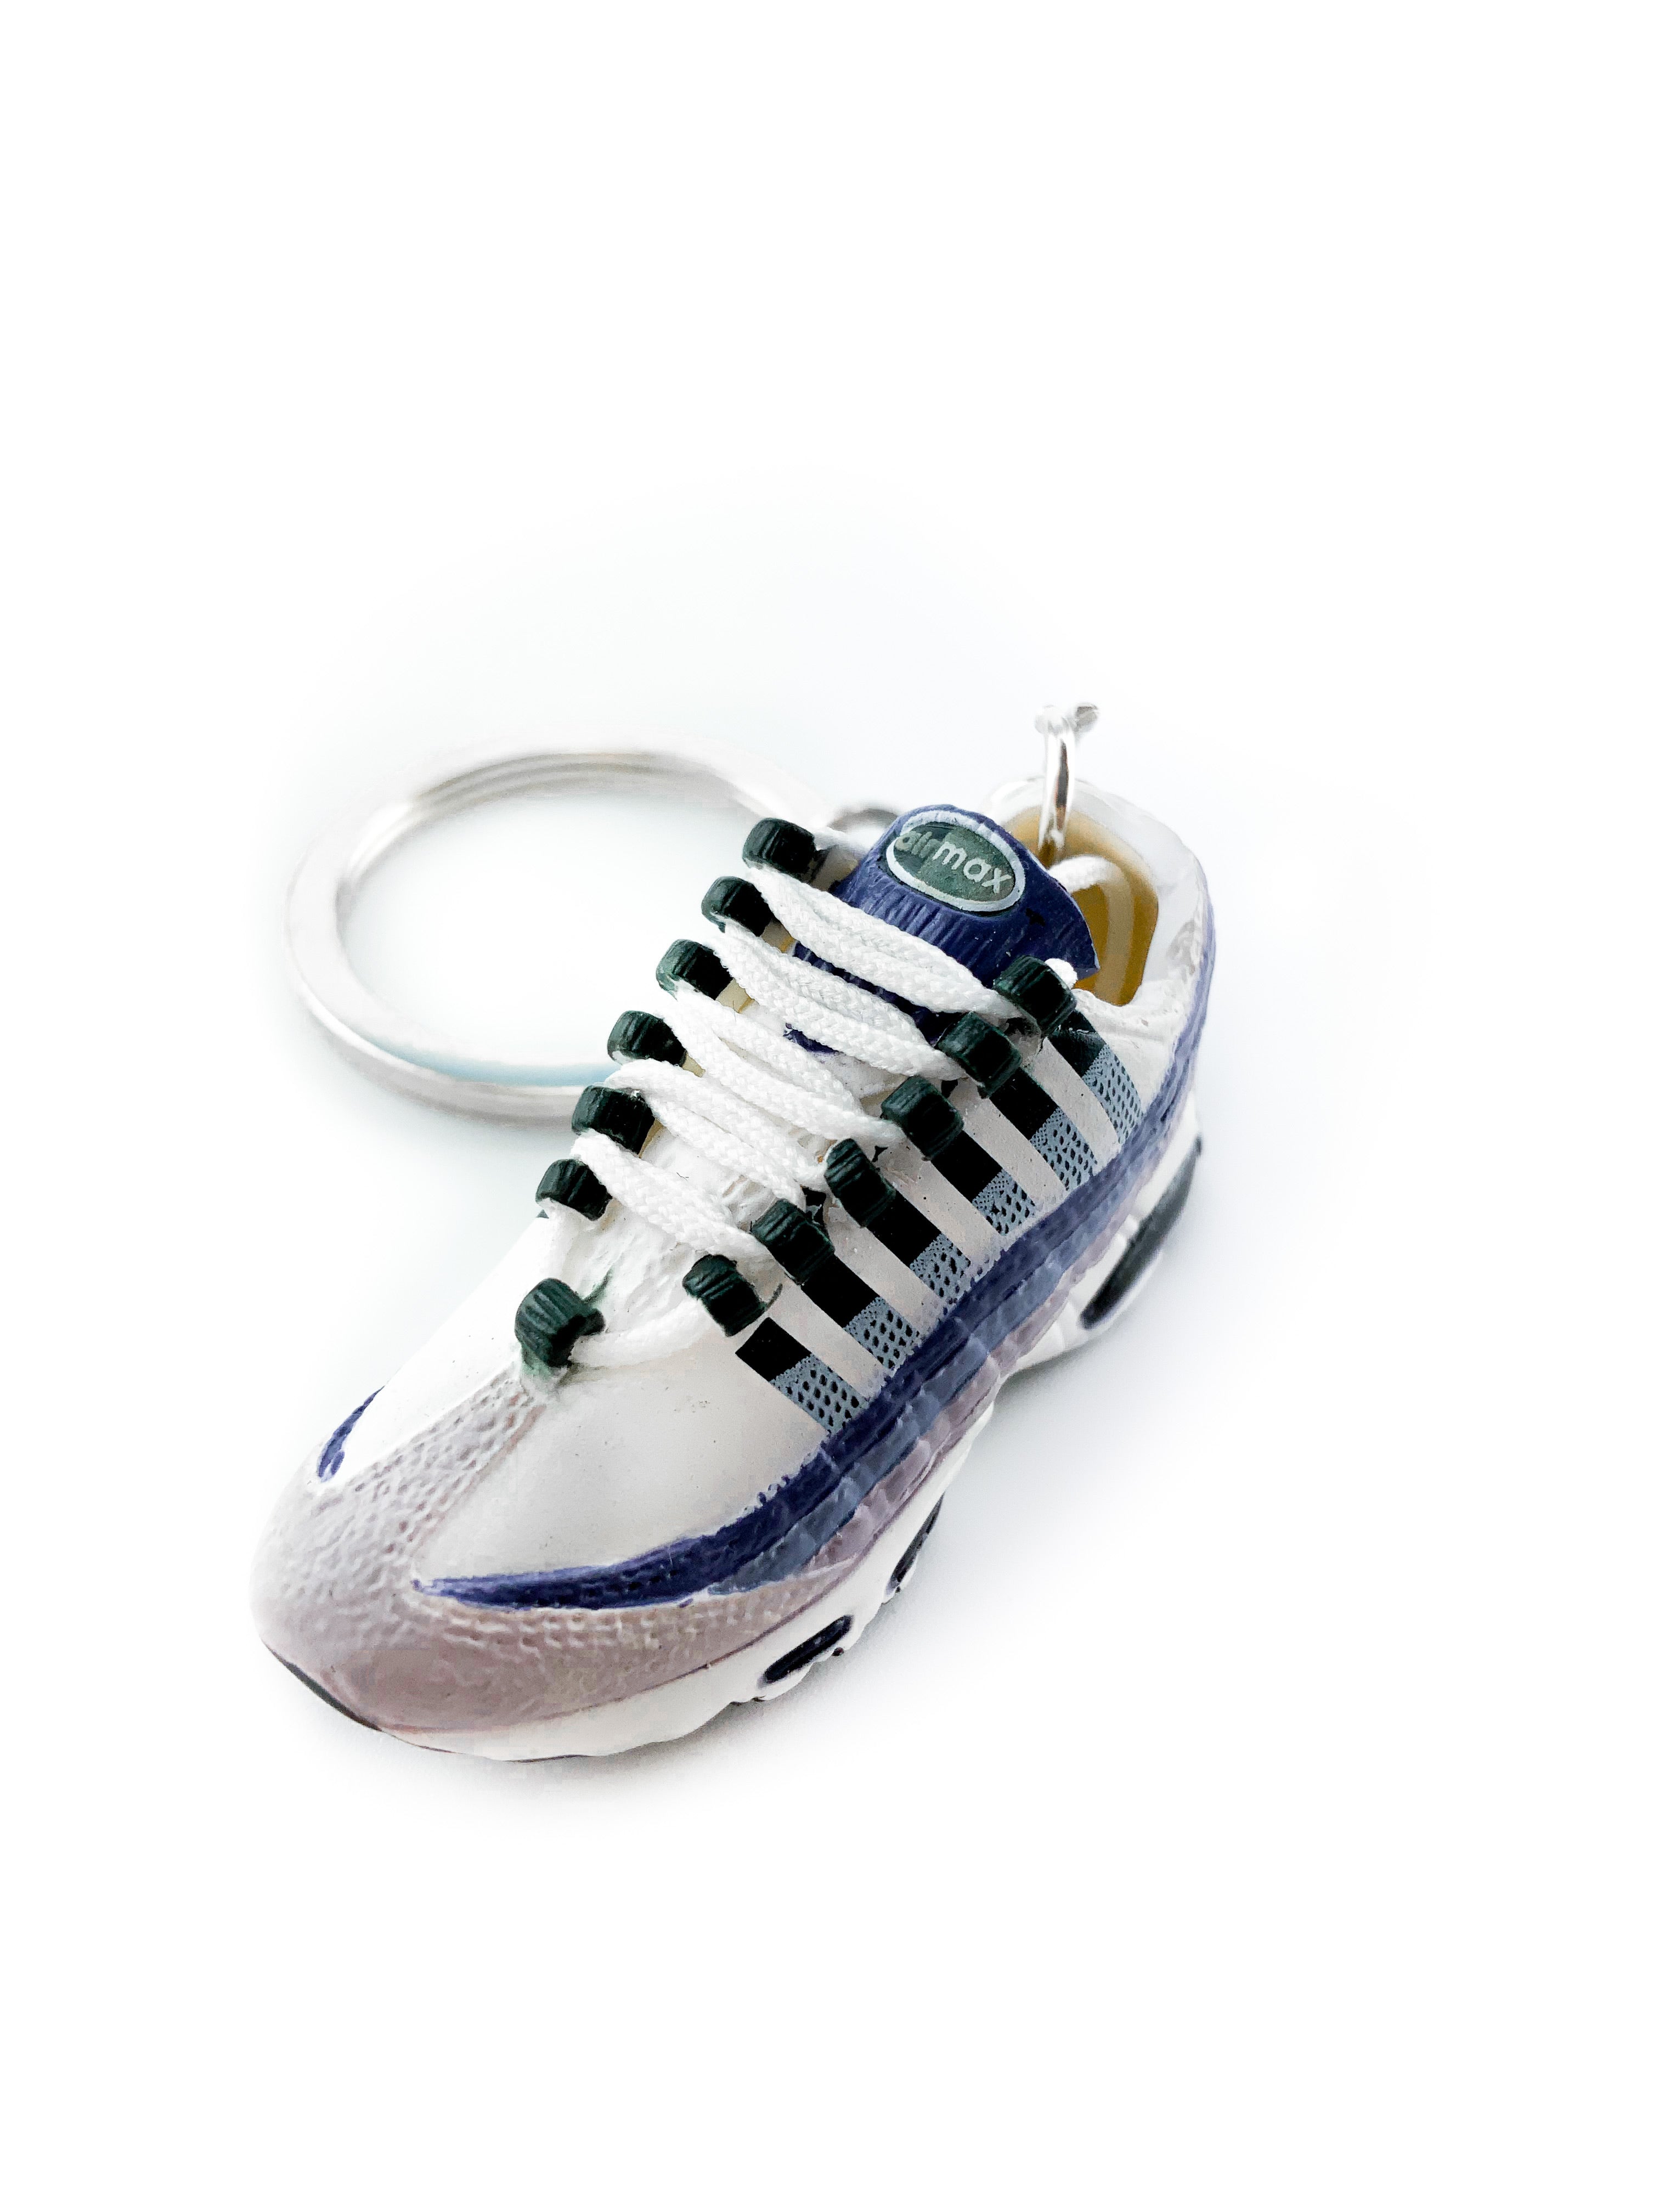 Mini Nike Air Max 95 Essential Black Replica Keychain - KLOUD9